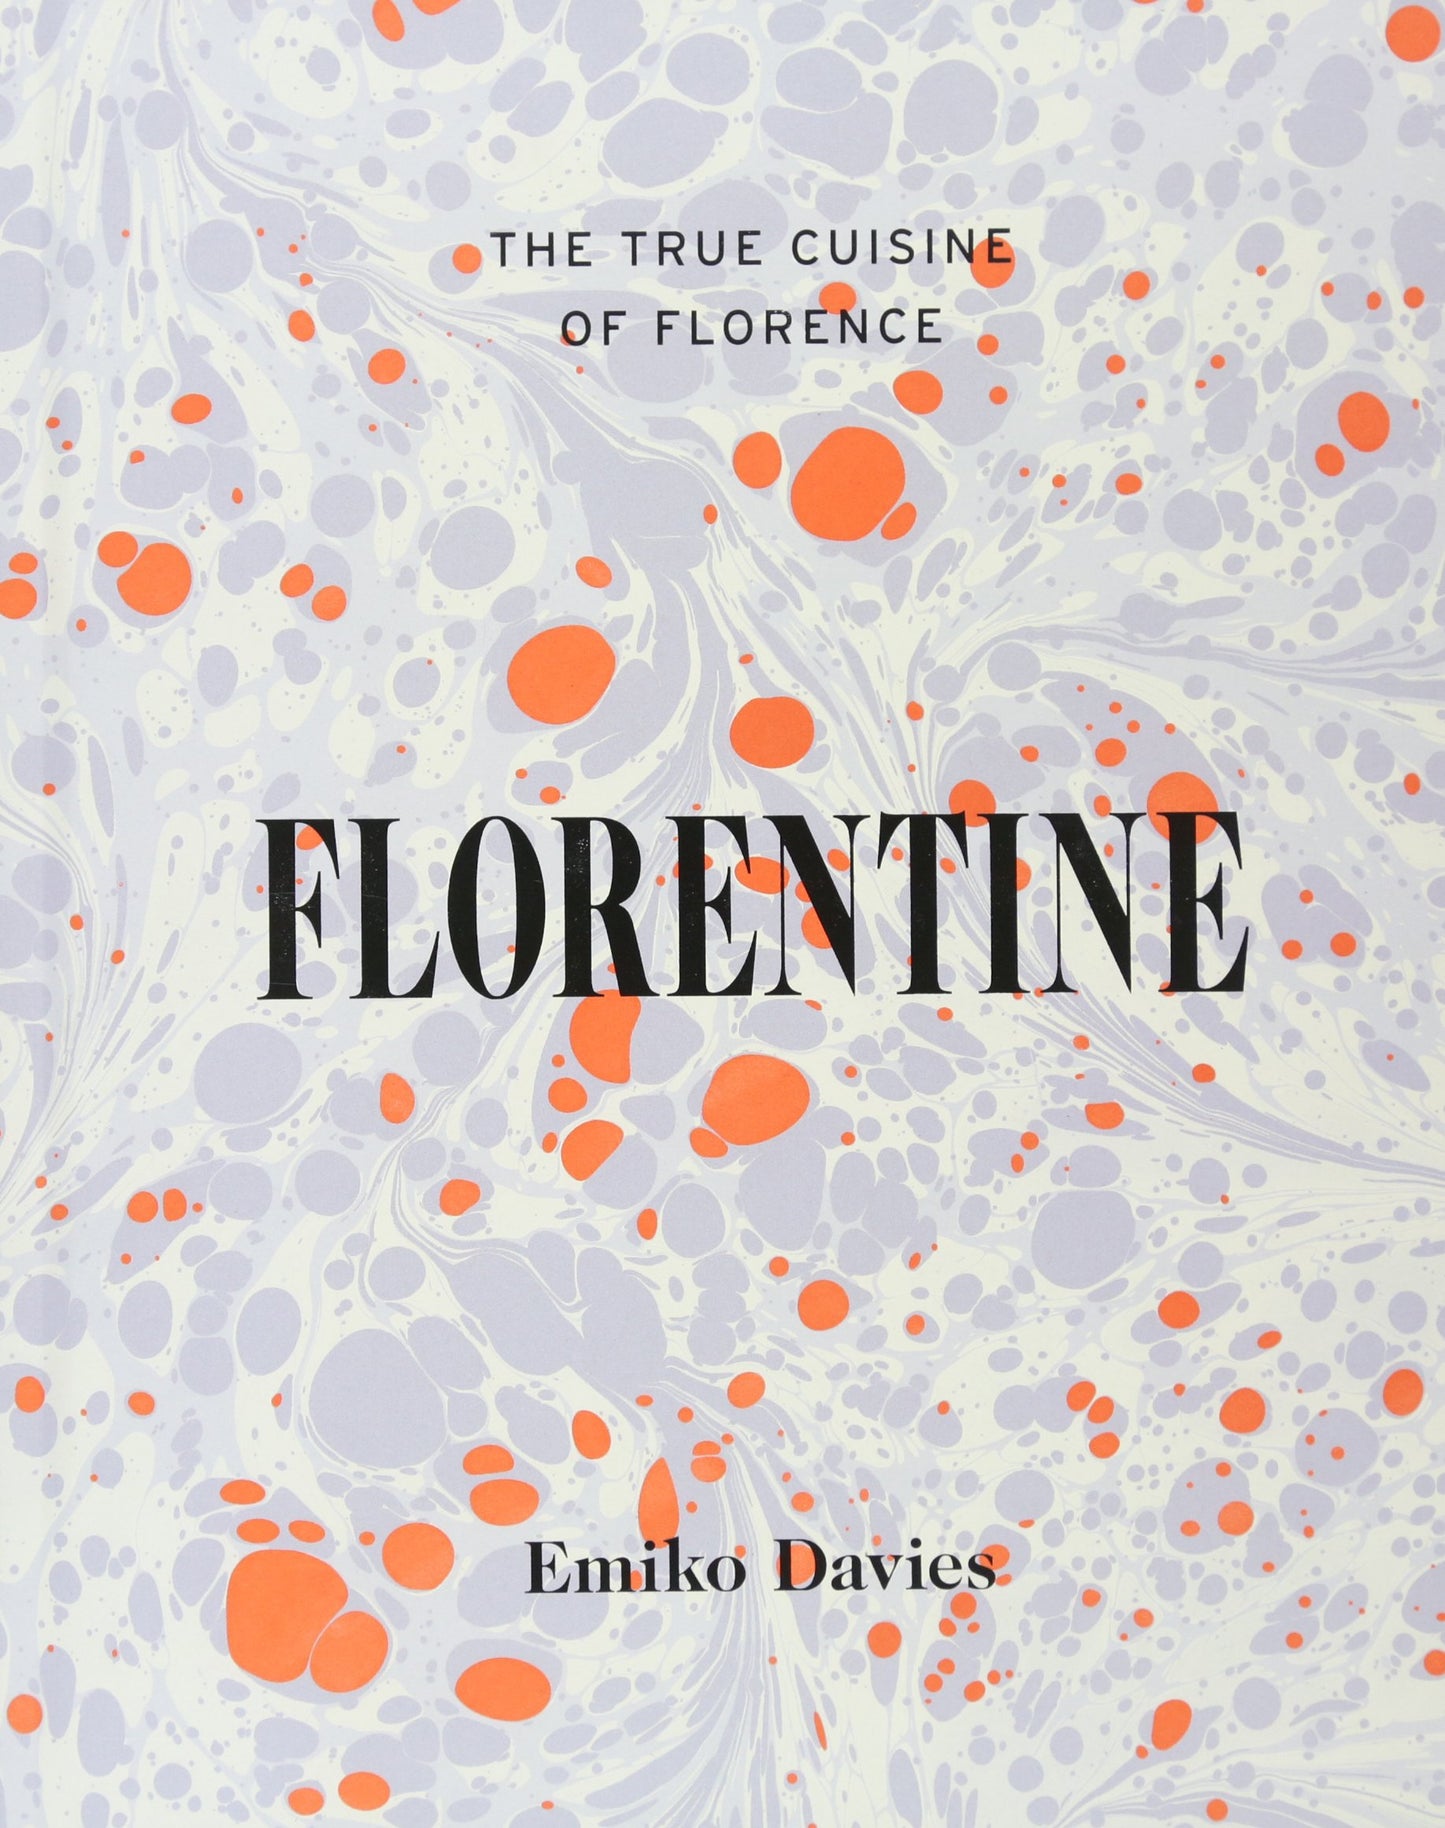 Florentine: The True Cuisine of Florence Author Emiko Davies LIB-111